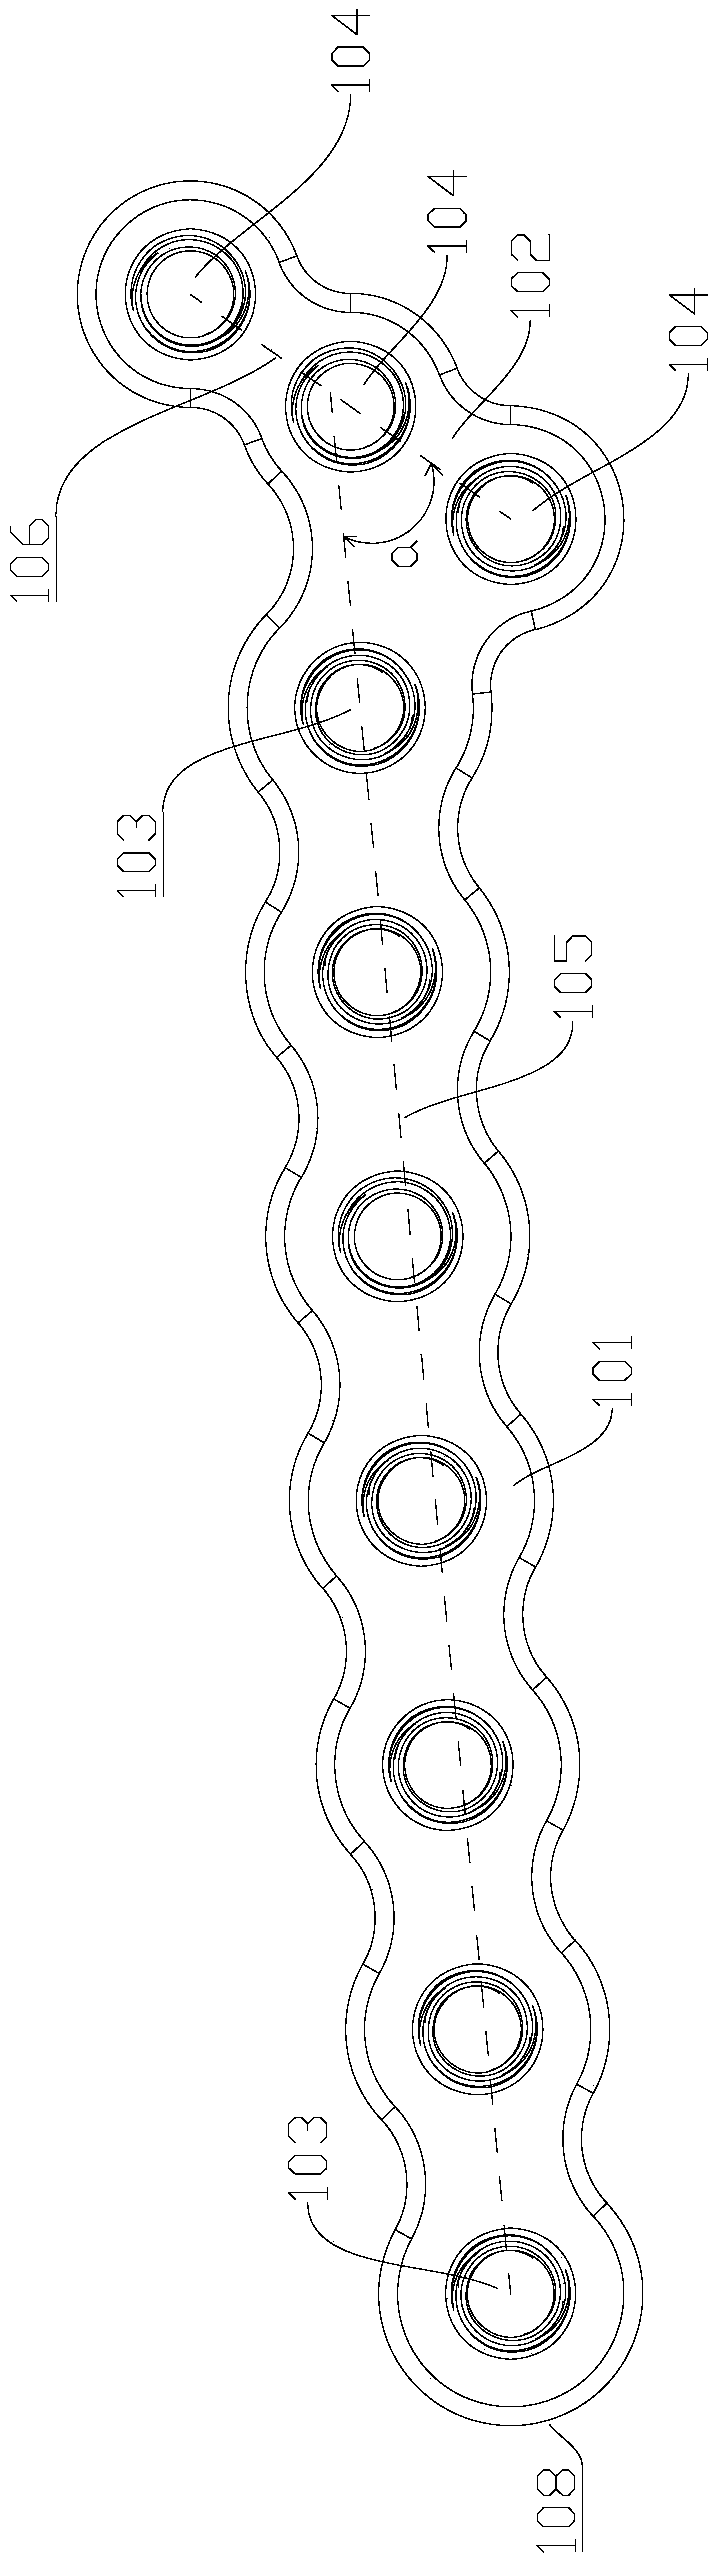 Scapular locking plate and scapular locking method